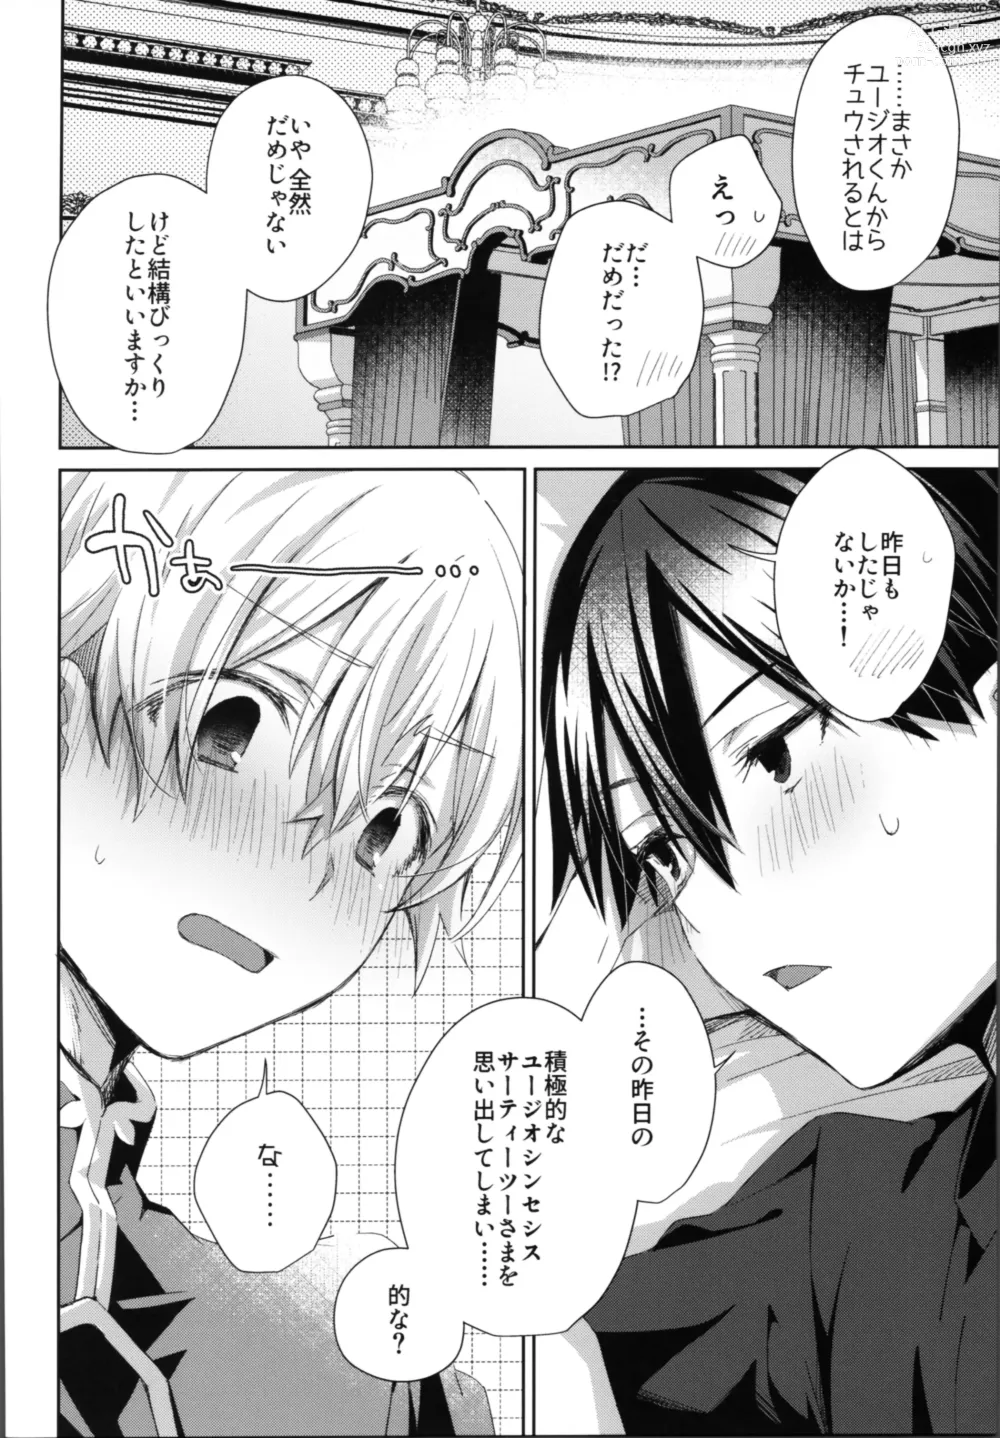 Page 7 of doujinshi Wake up!